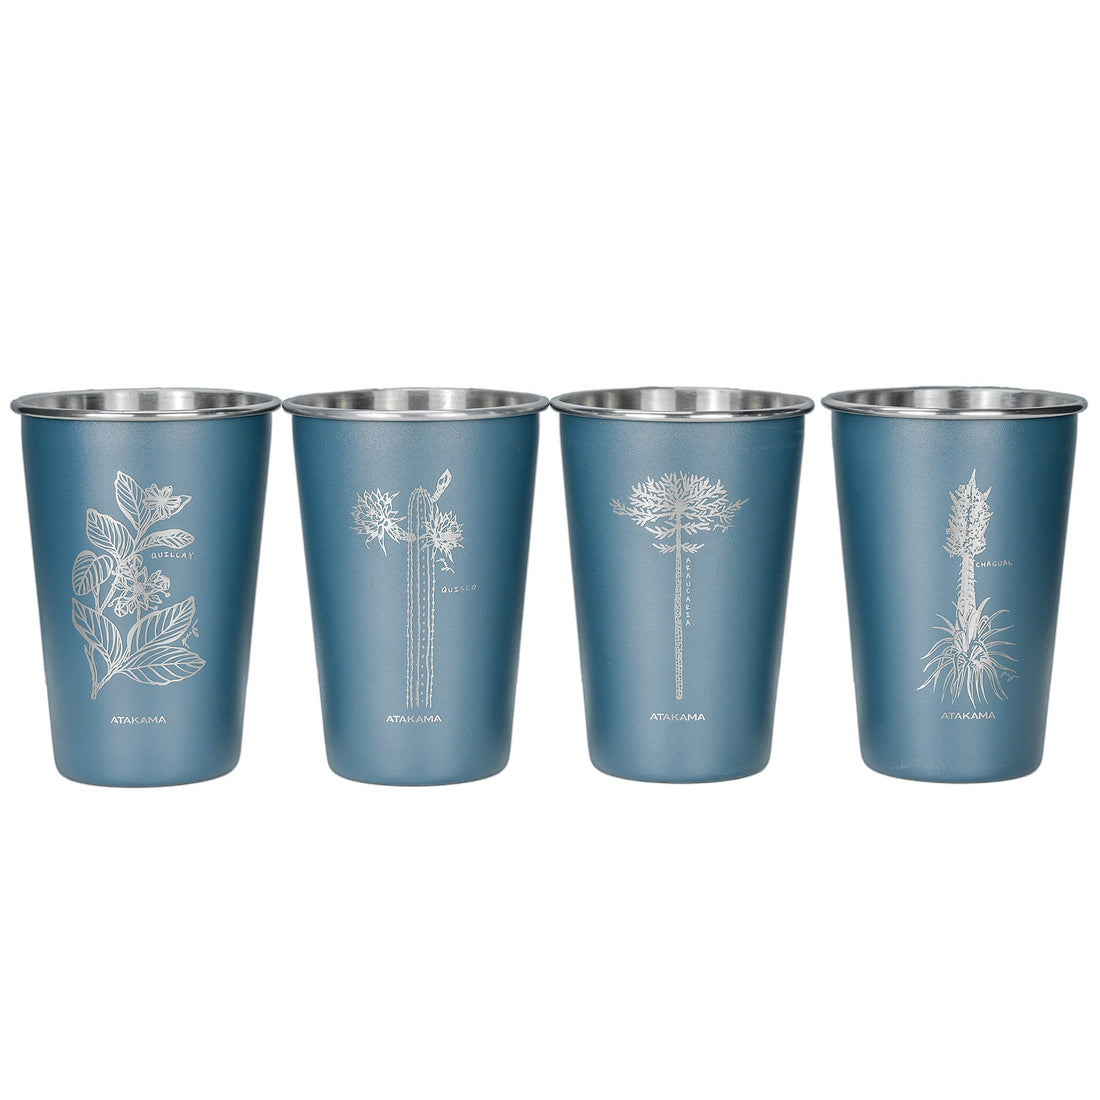 Set de cuatro vasos flora chilenas azul Aluminio 480 mililitros Atakama Outdoor Quillay Quisco Araucaria Chagual